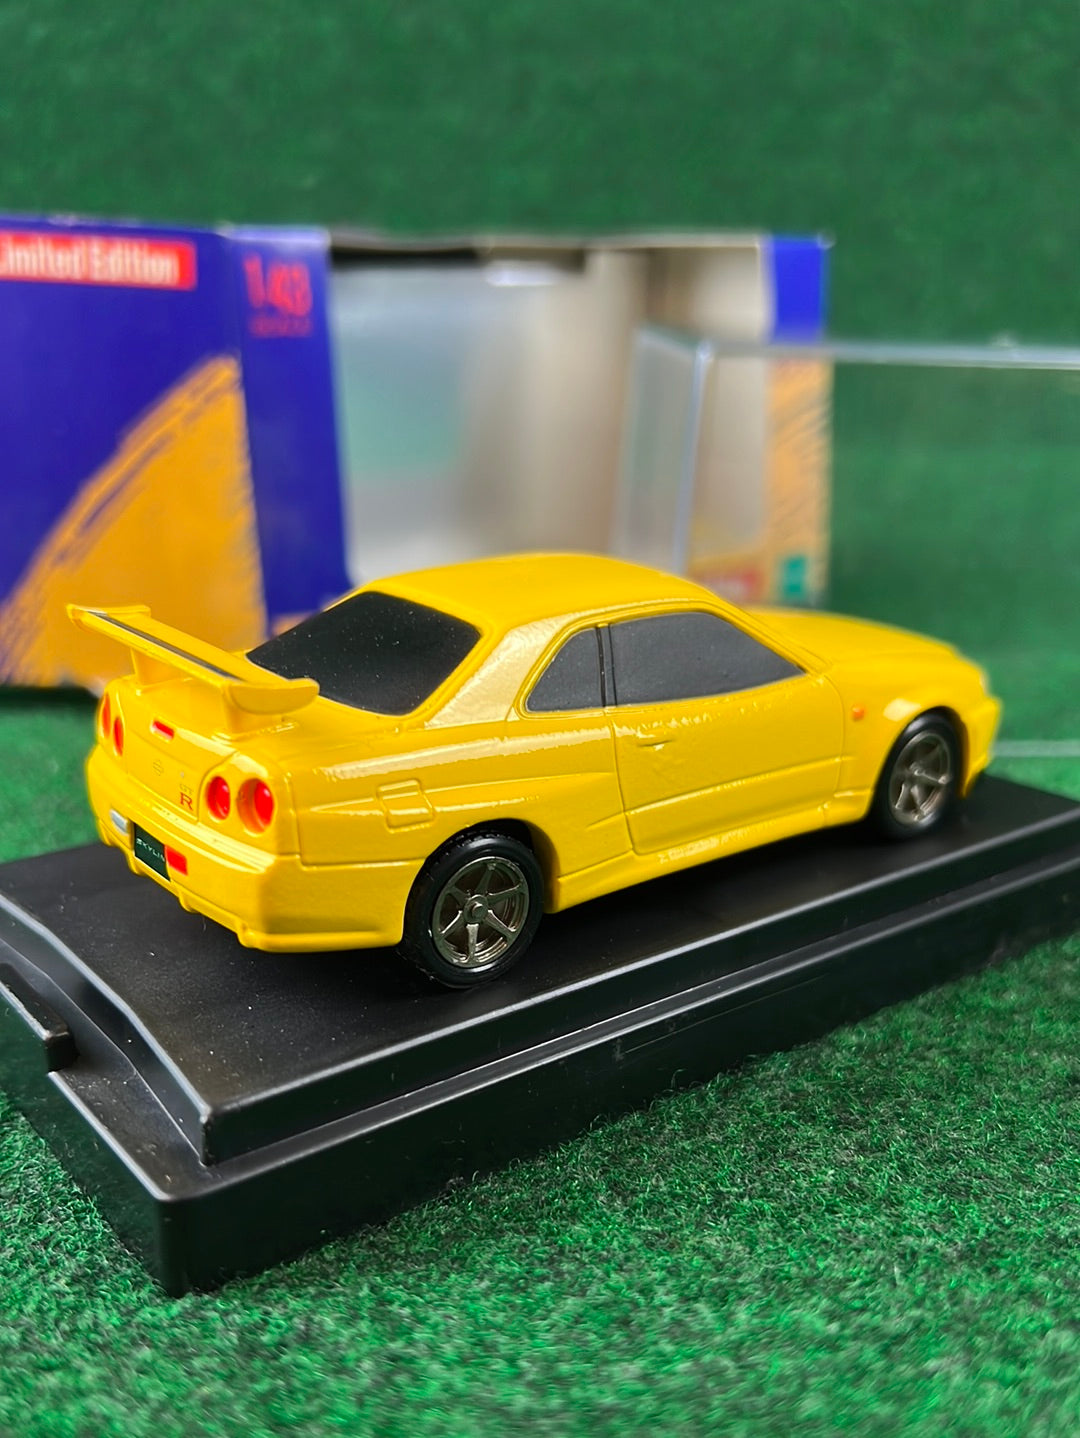 MTECH Limited Edition Nissan Skyline R34 GTR “EV1” Lightning Yellow Tribute Diecast